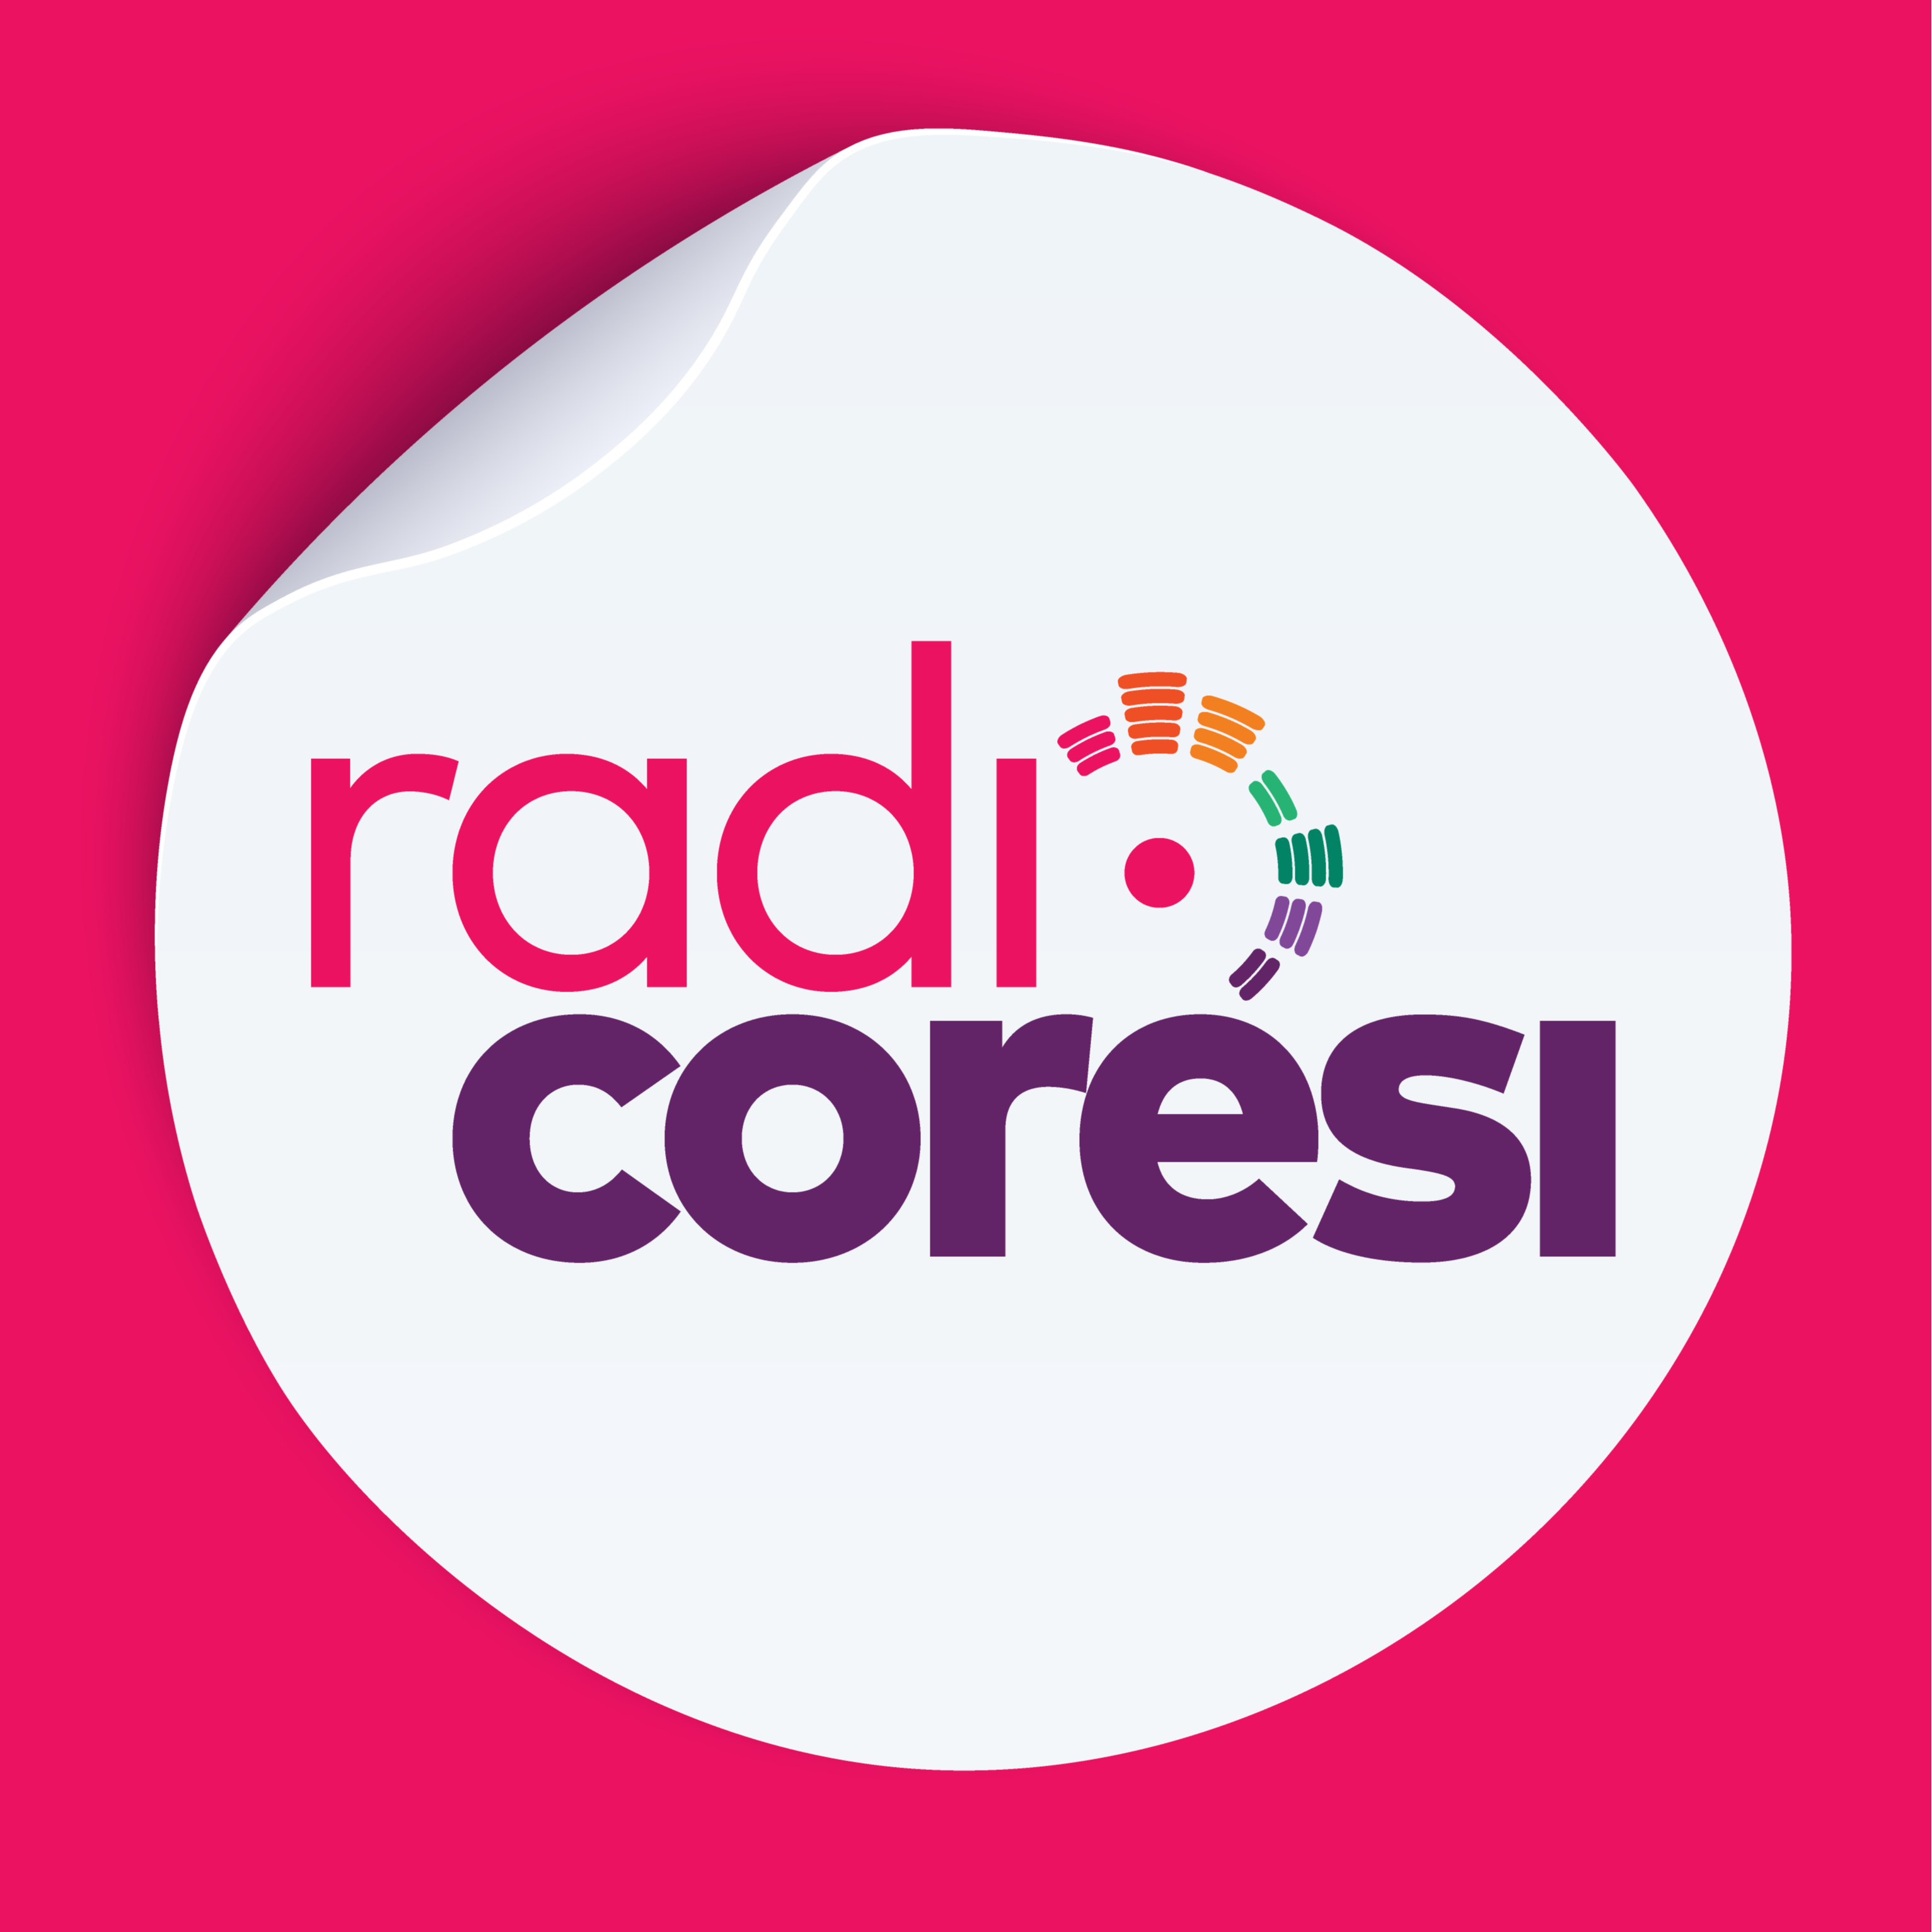 Radio Coresi